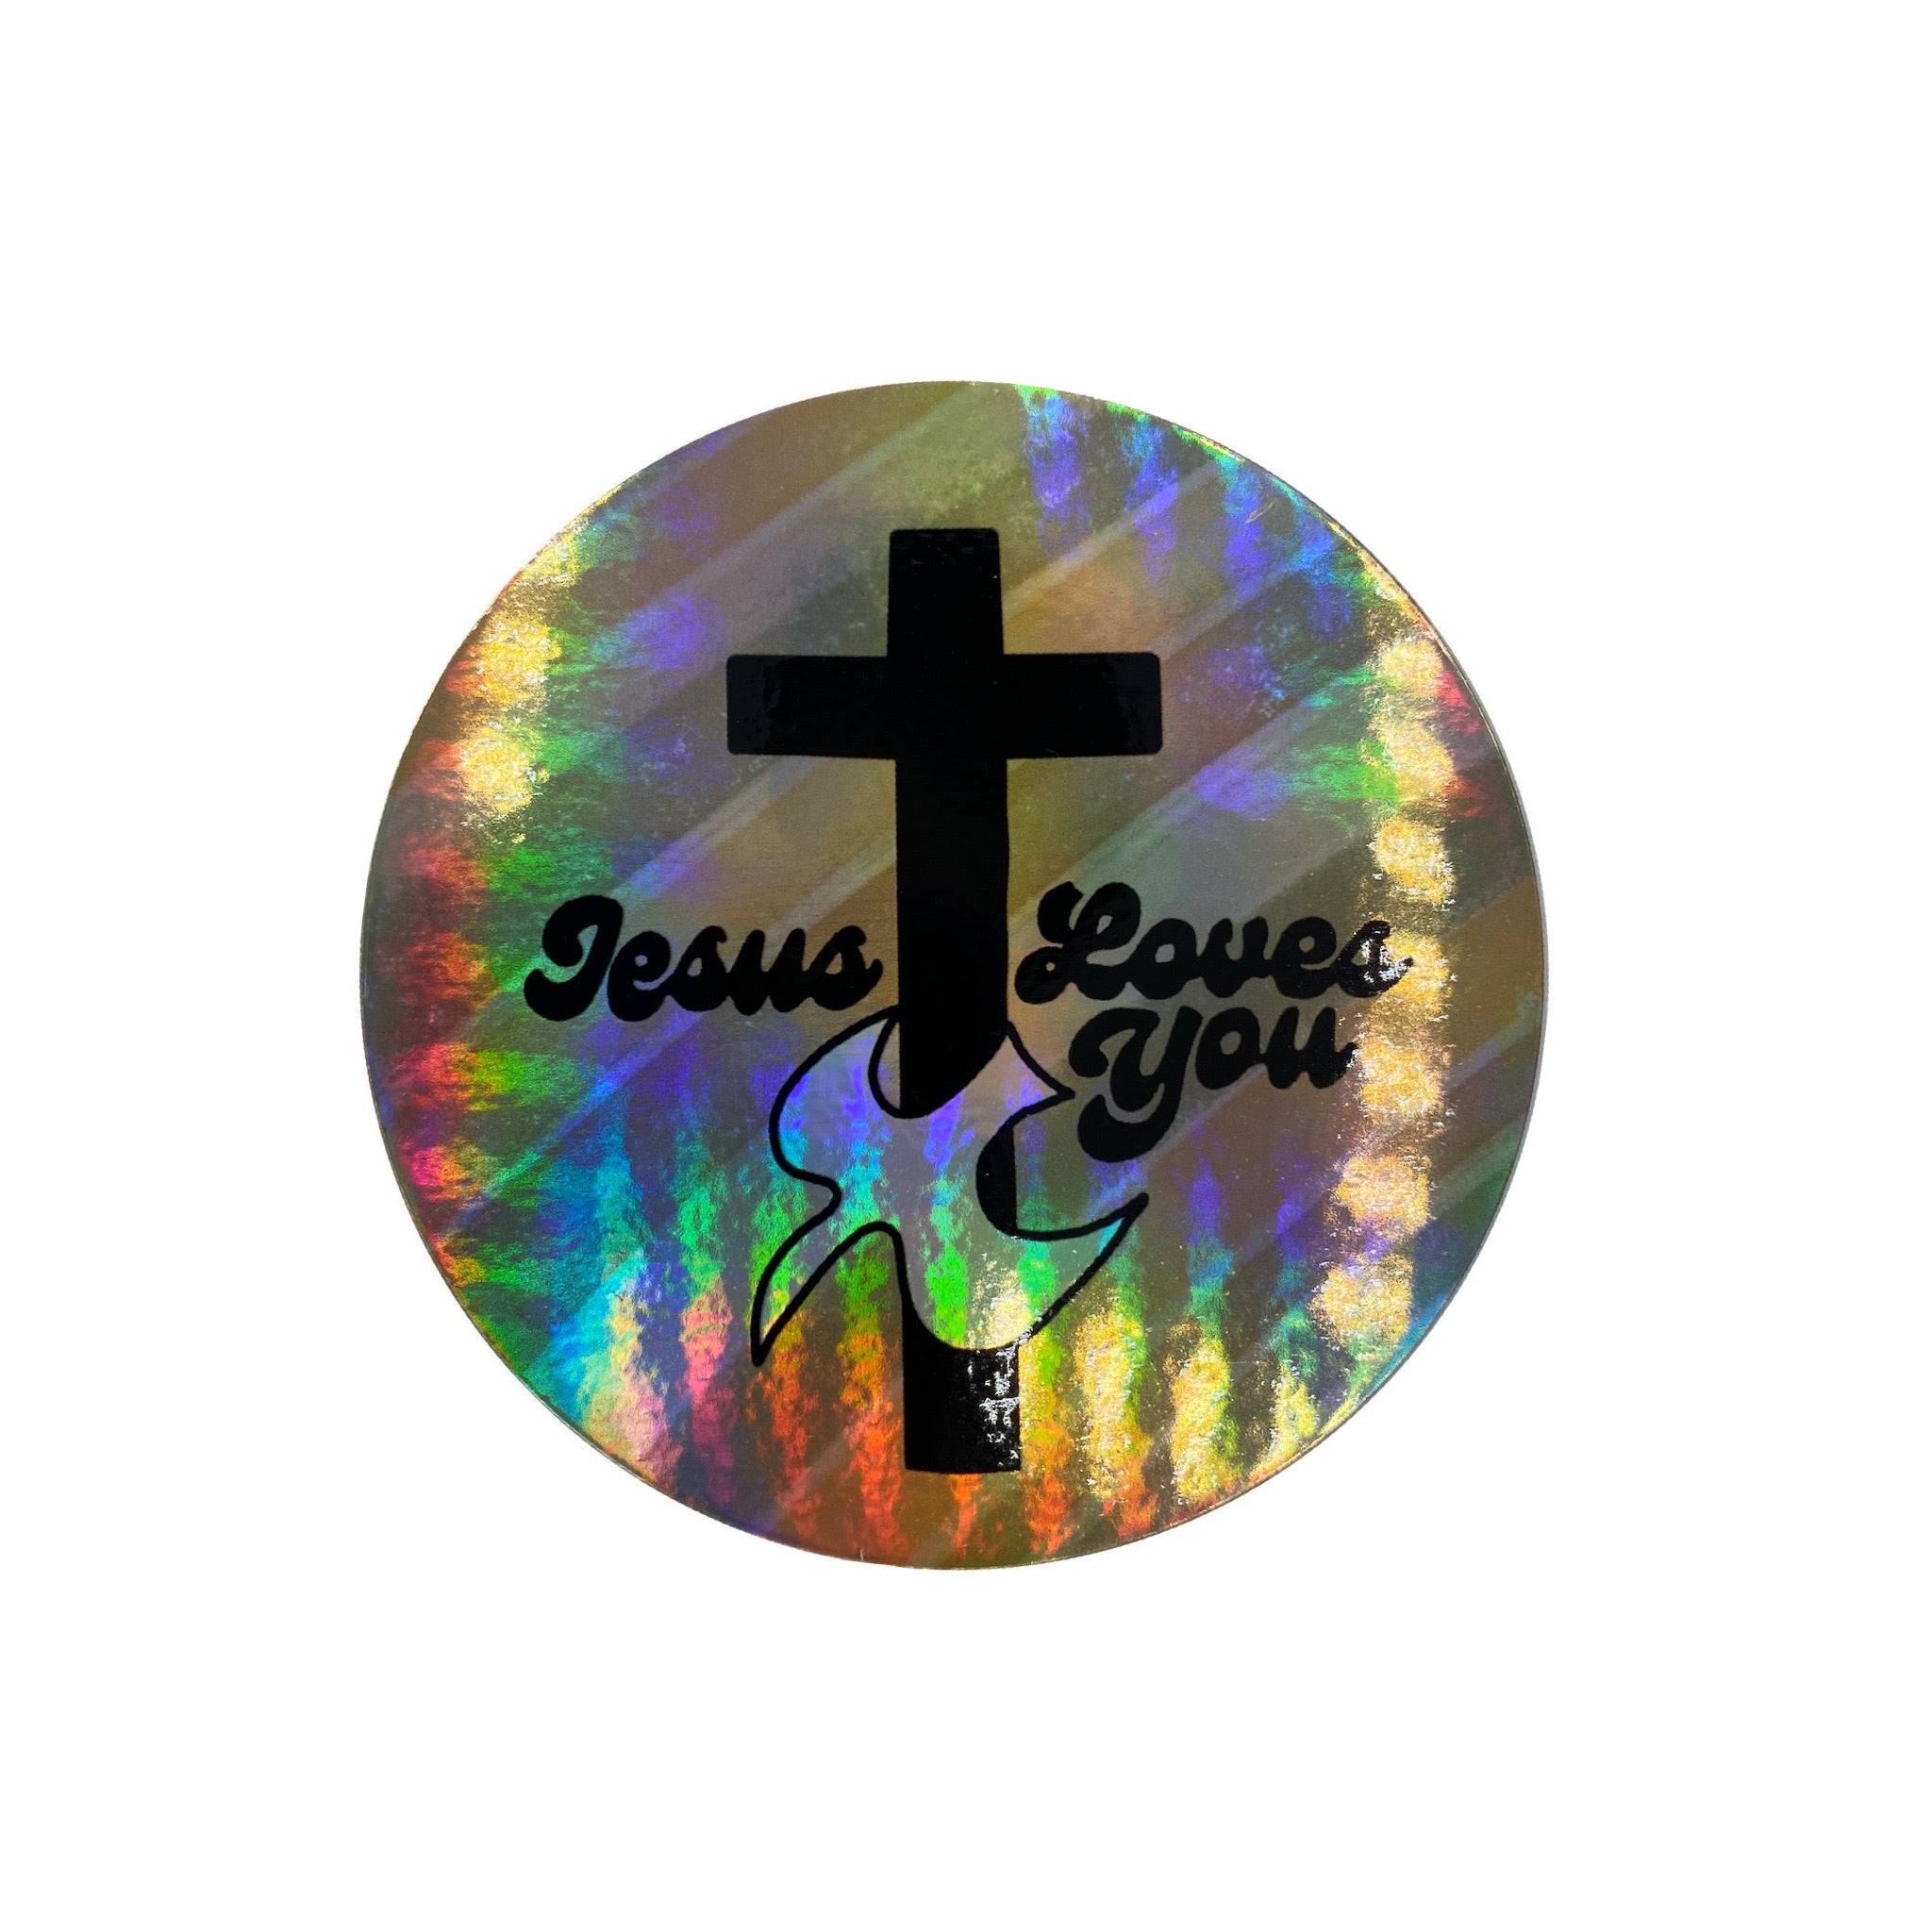 StickerTalk I Love Jesus Vinyl Sticker, 5 Inches x 3.5 Inches